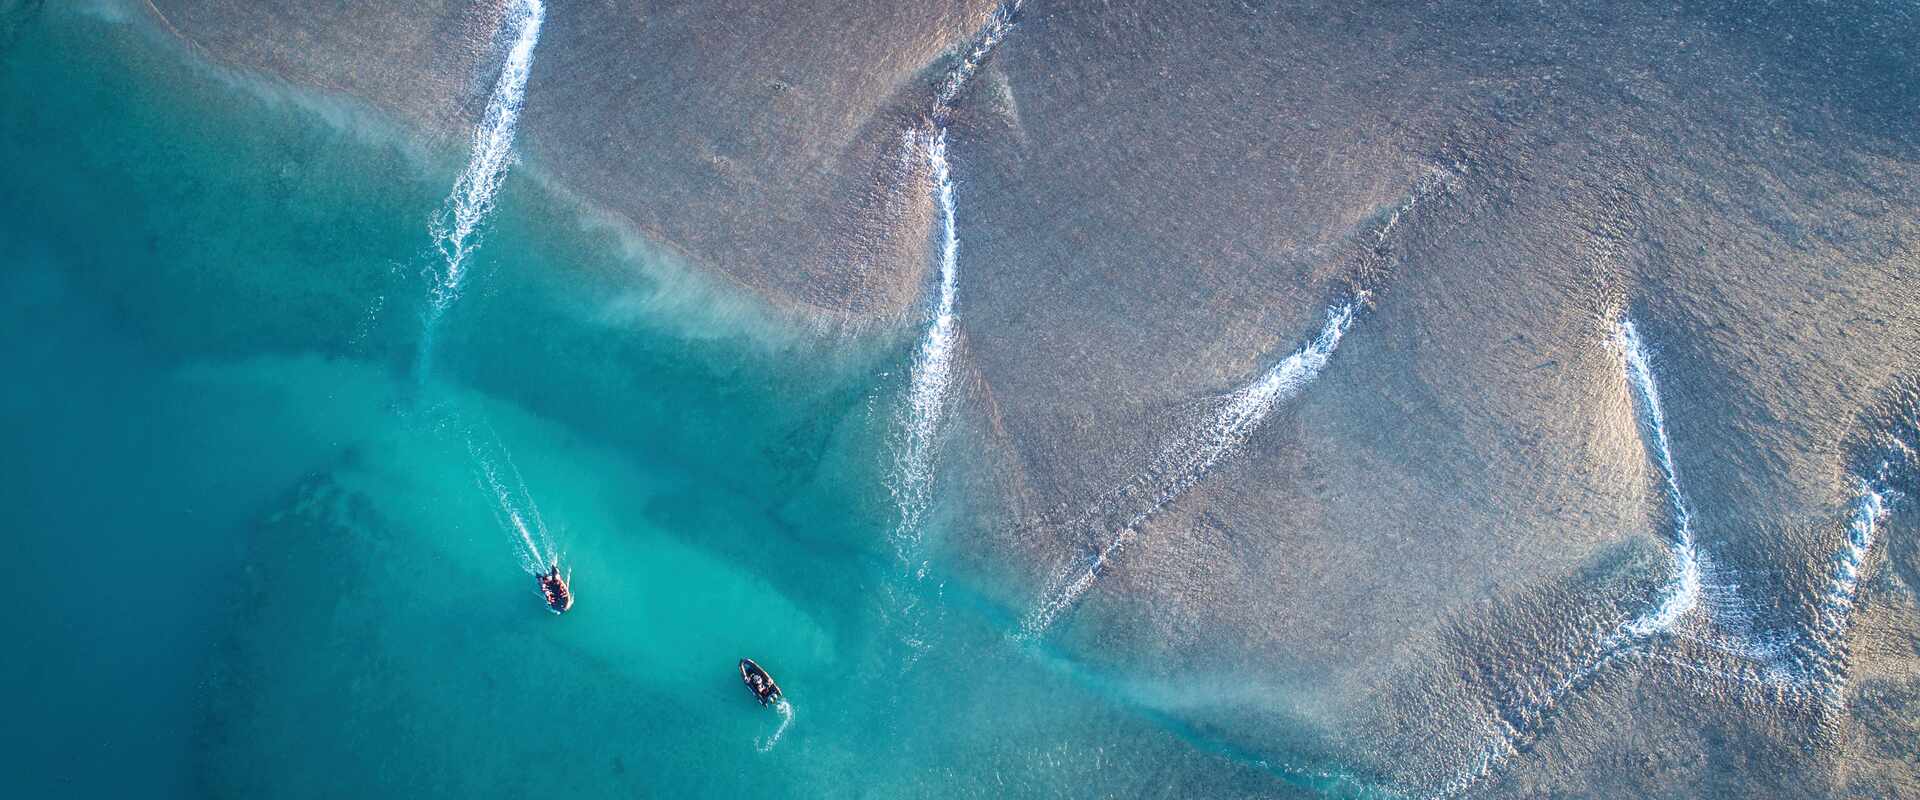 aerial view montgomery reef kimberley coast, australia